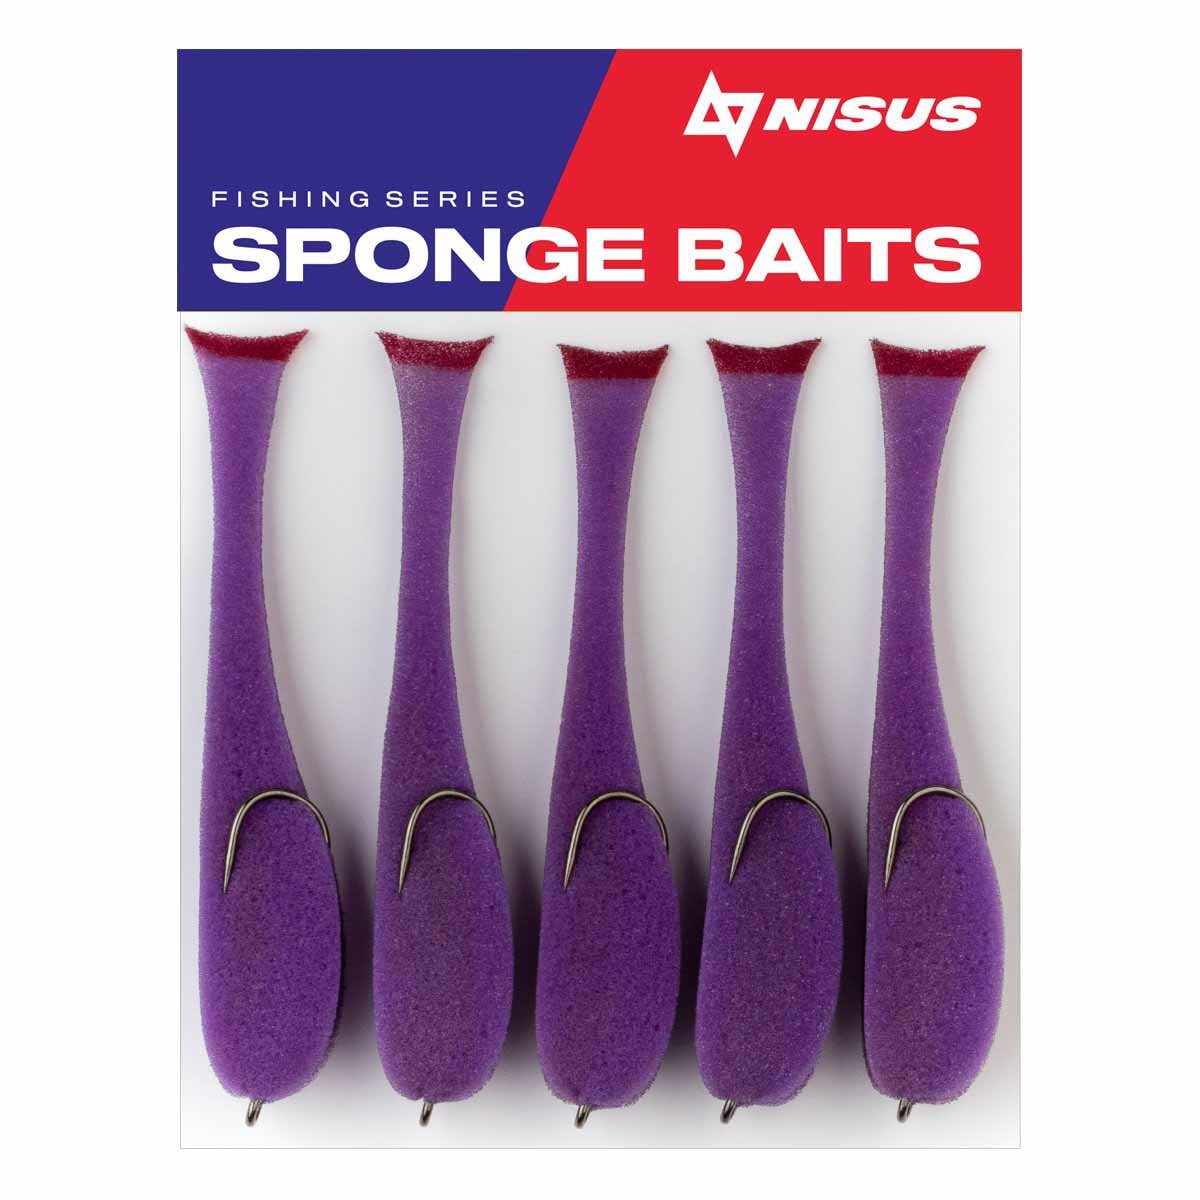 Nisus 3 inch Sponge Bait Fishing Lure, pack of 5